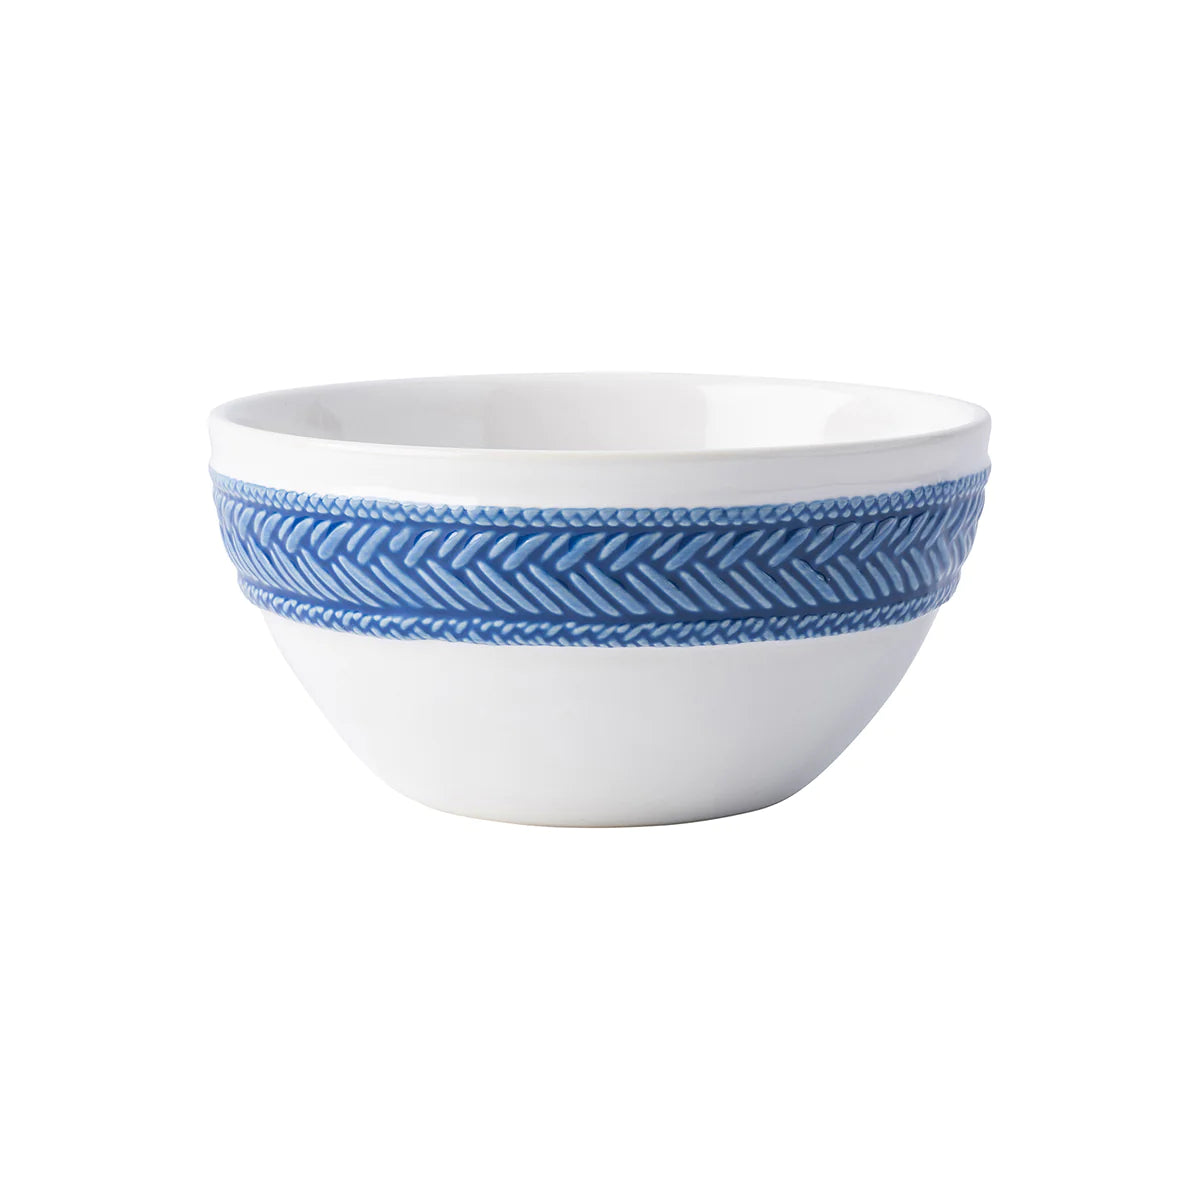 Juliska Le Panier Cereal Bowl - Delft Blue